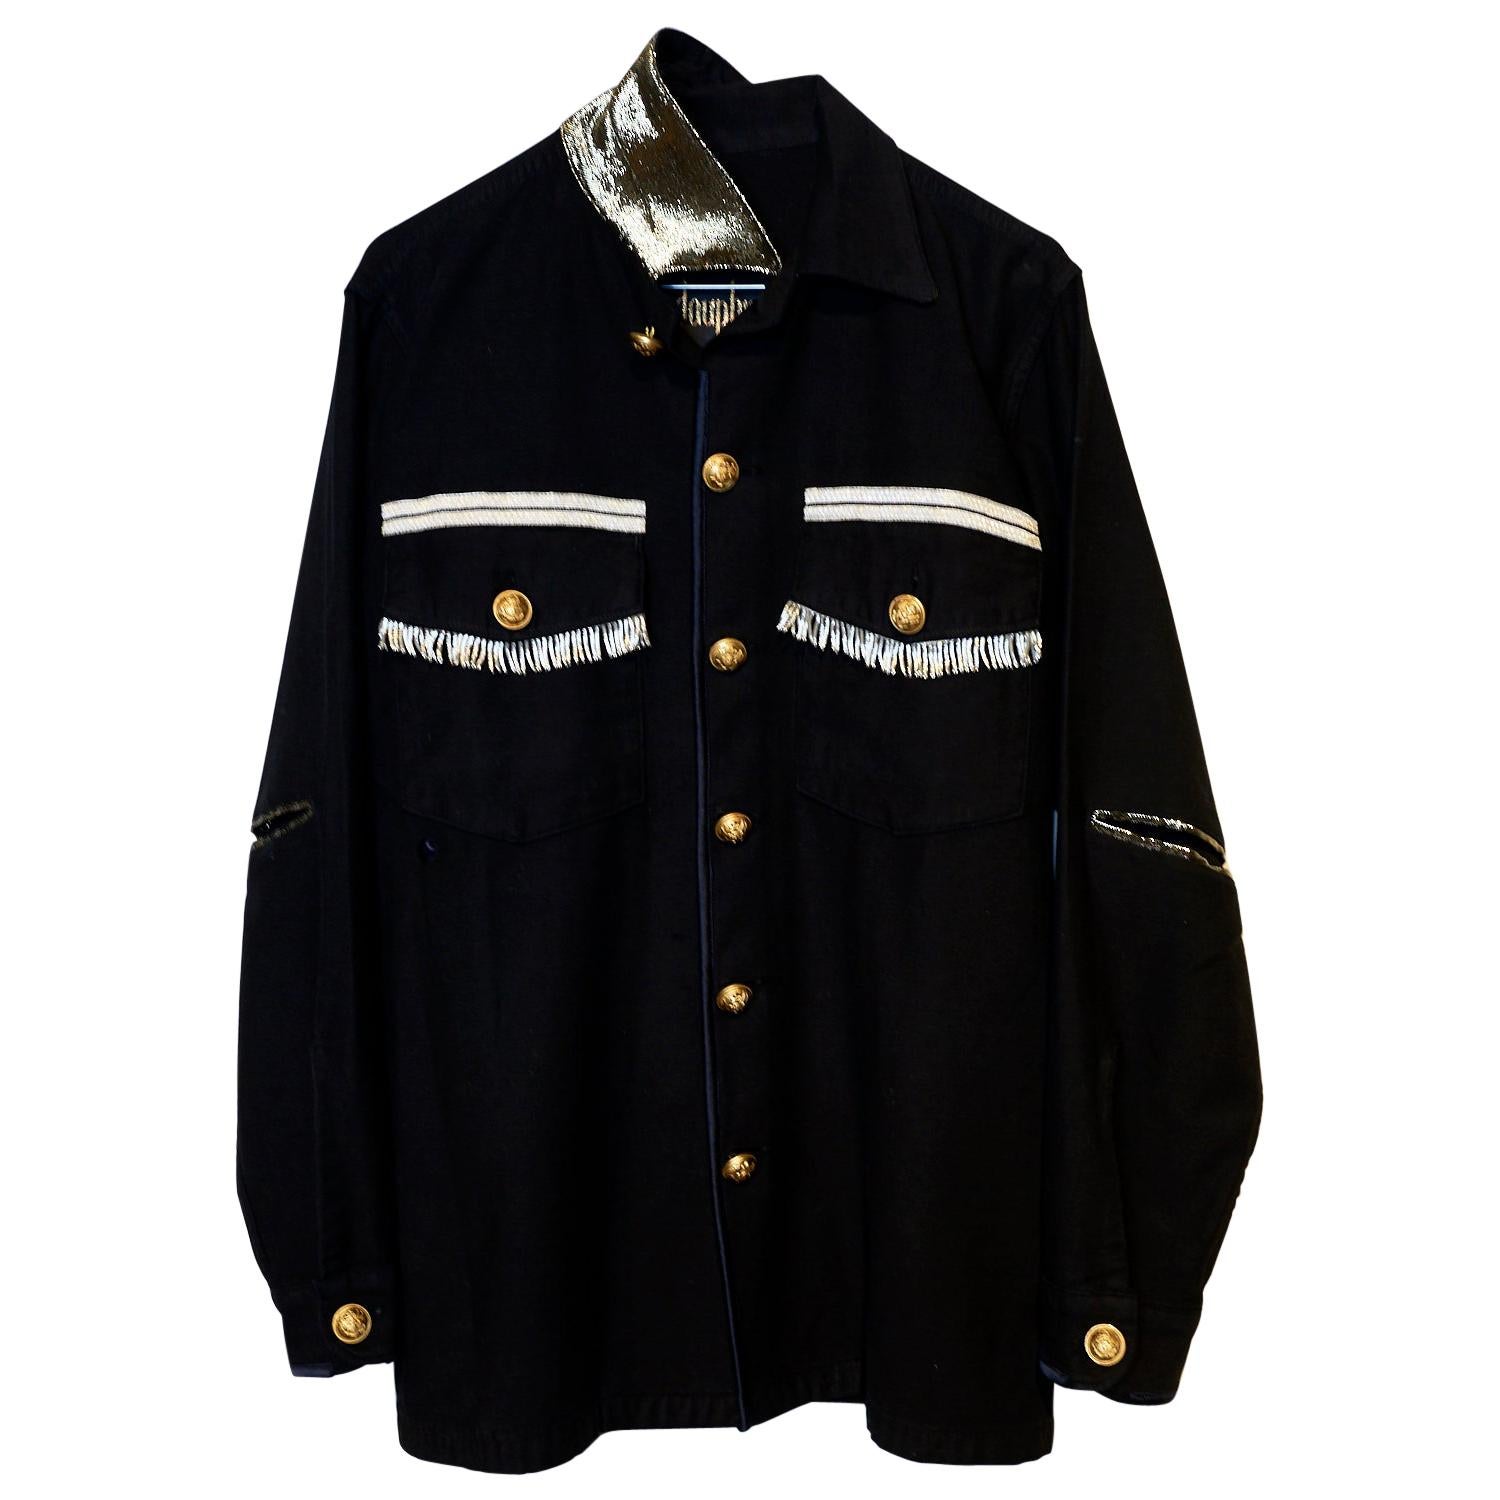 Silver Fringe Jacket Black Military Braid Gold Lurex Gold Button J Dauphin